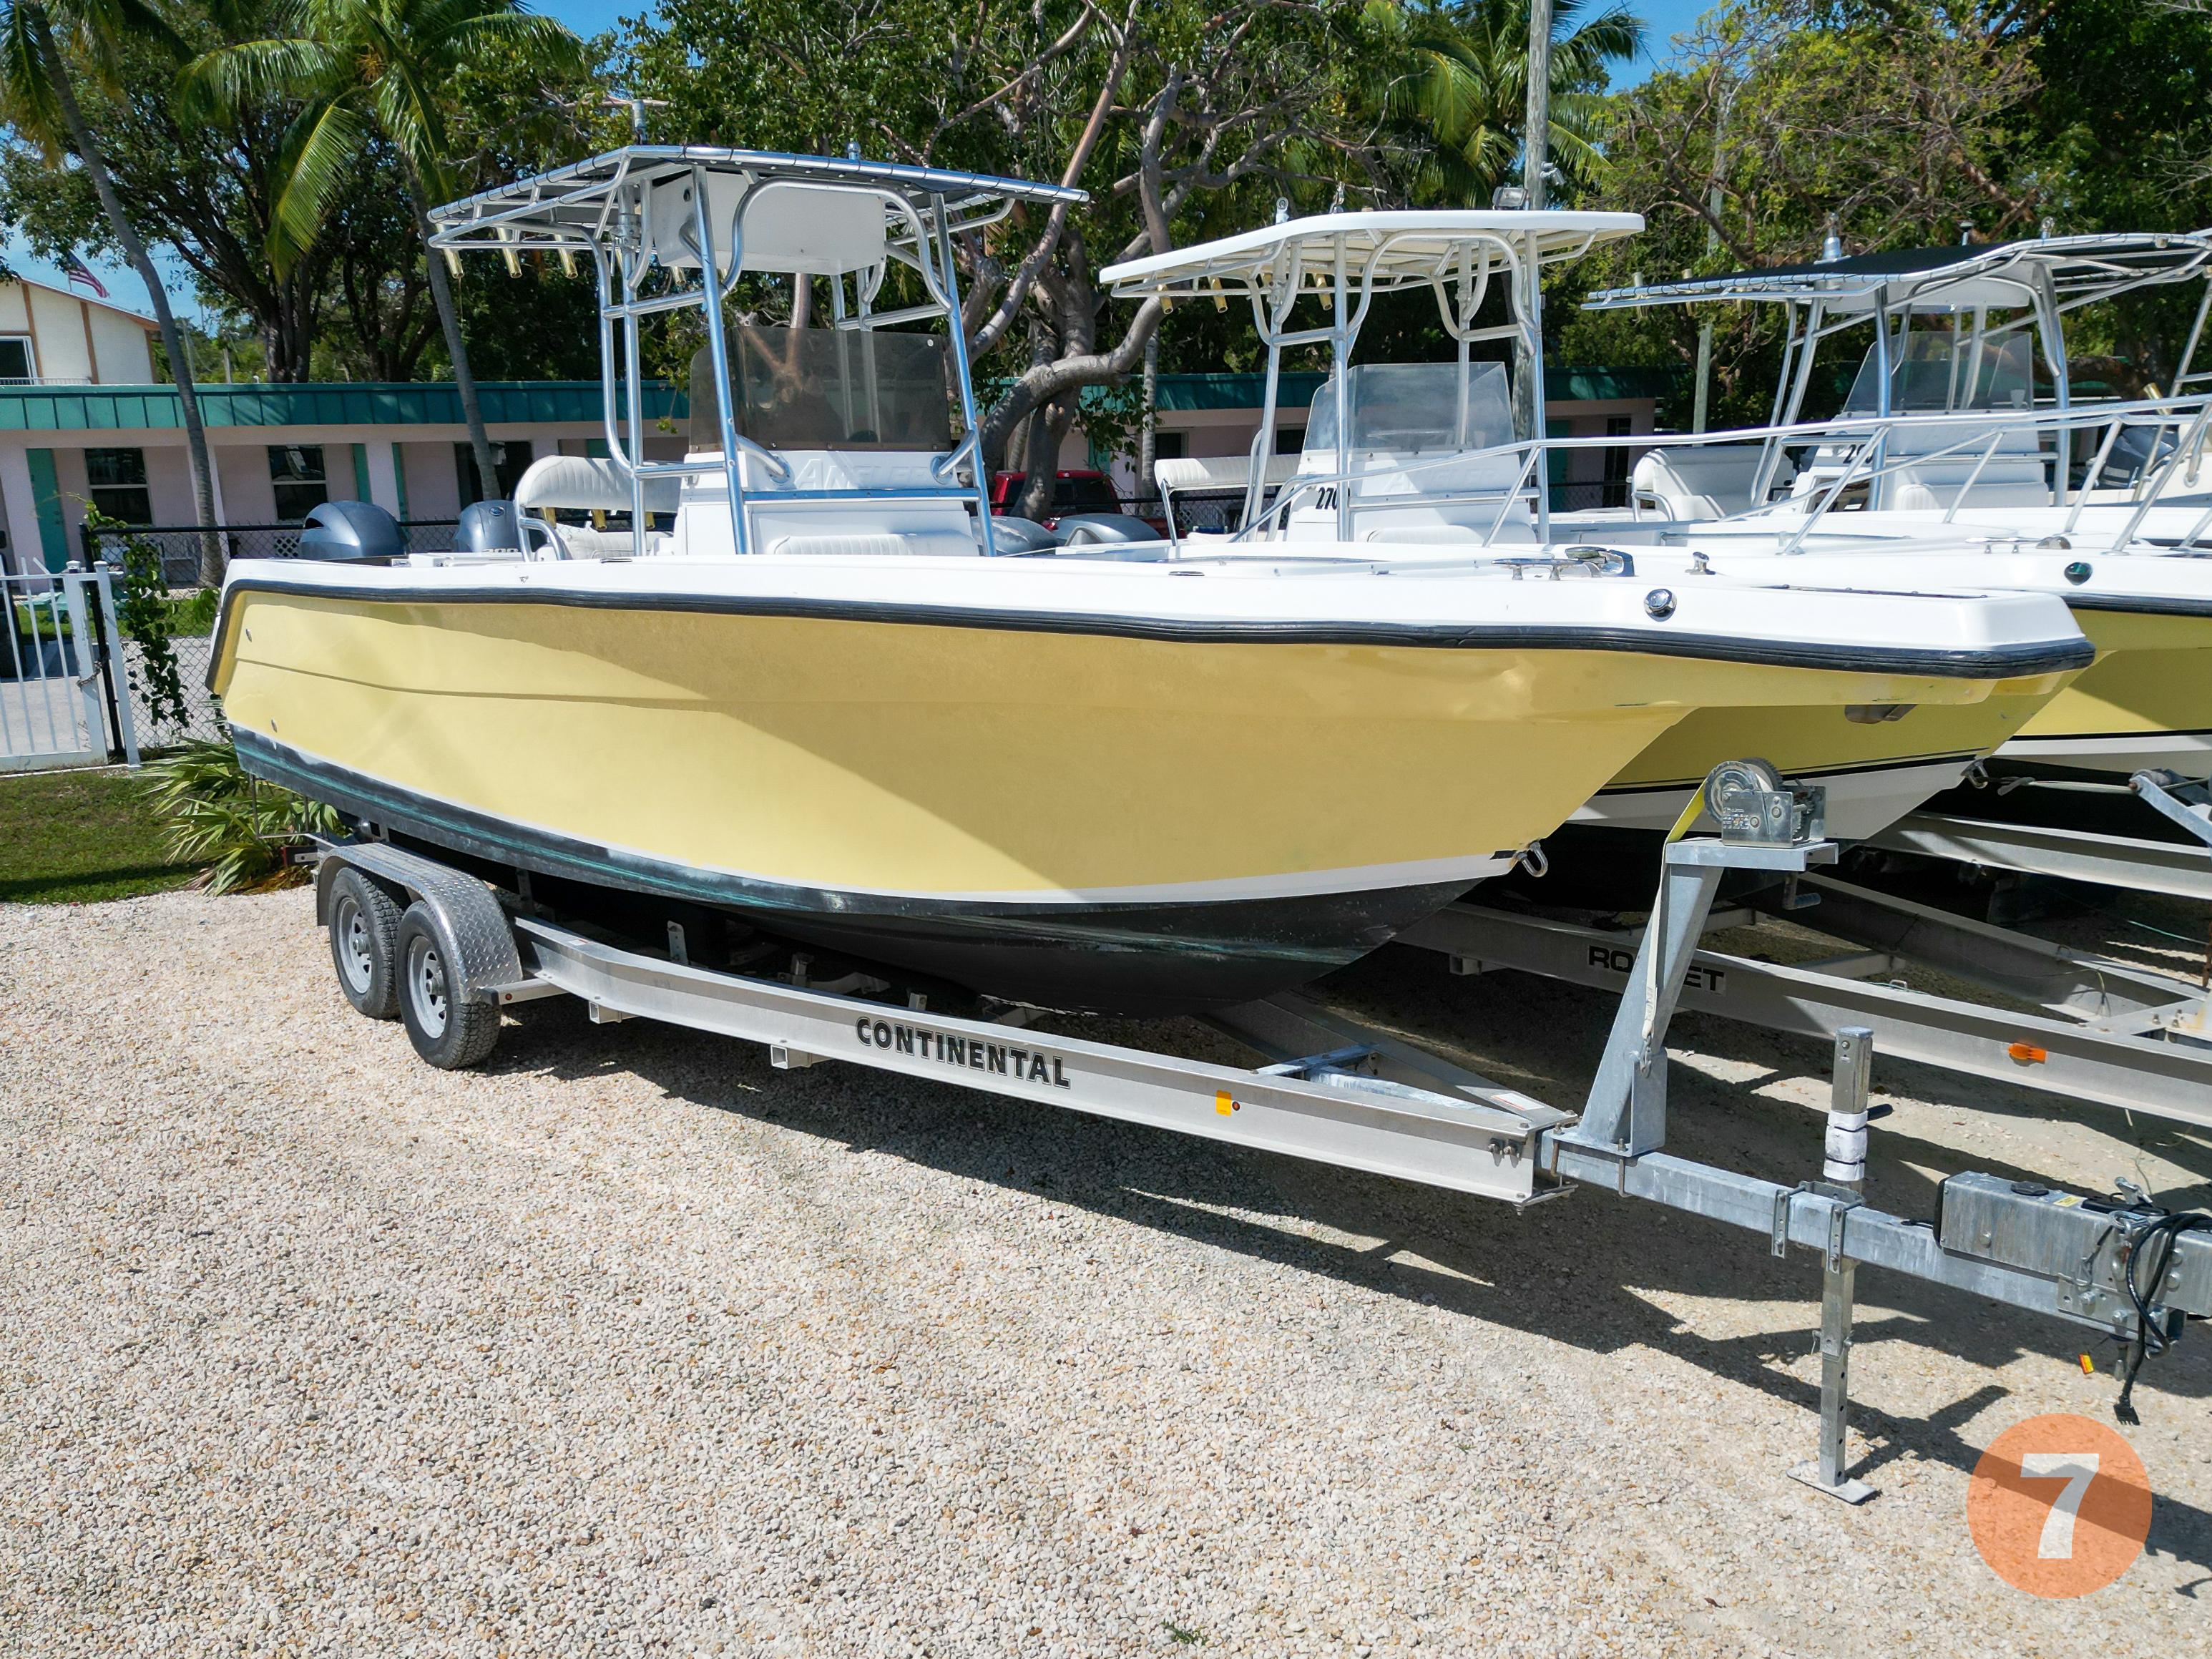 Angler boats for sale in Florida - Boat Trader